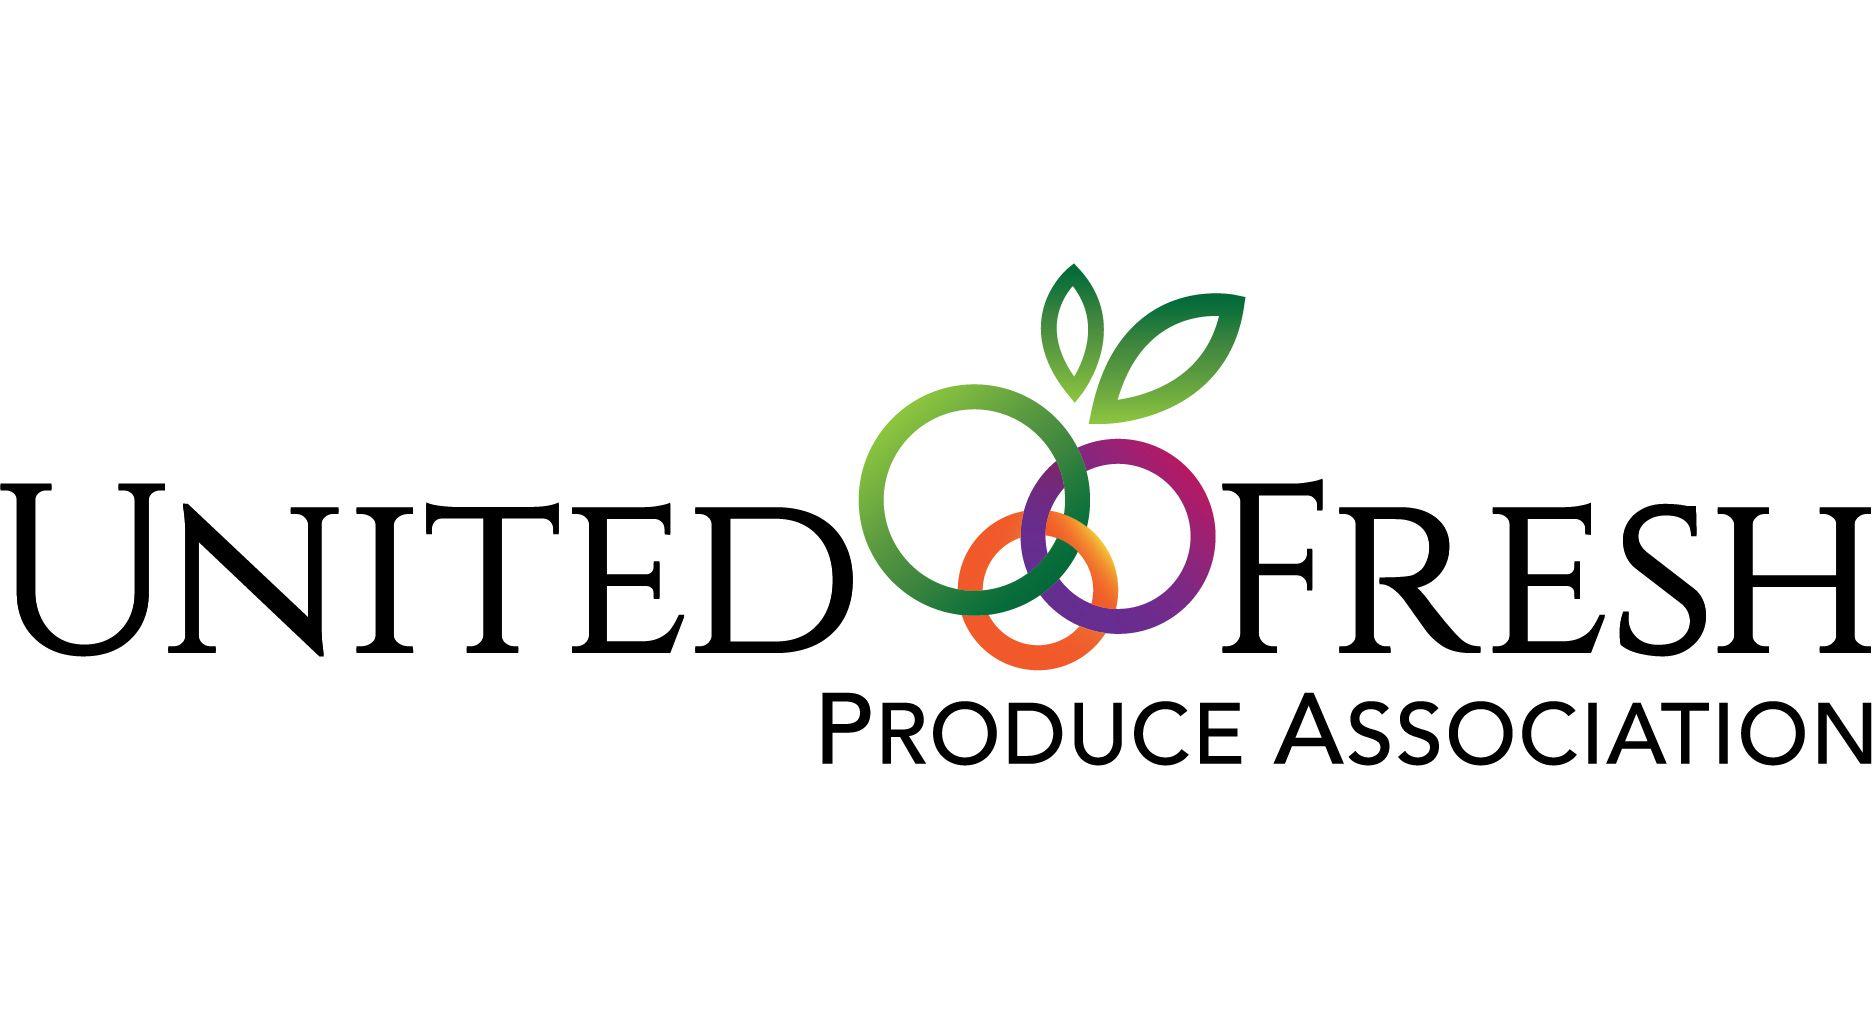 United Fresh Logo - United Fresh Launches New Logo, Website | Progressive Grocer